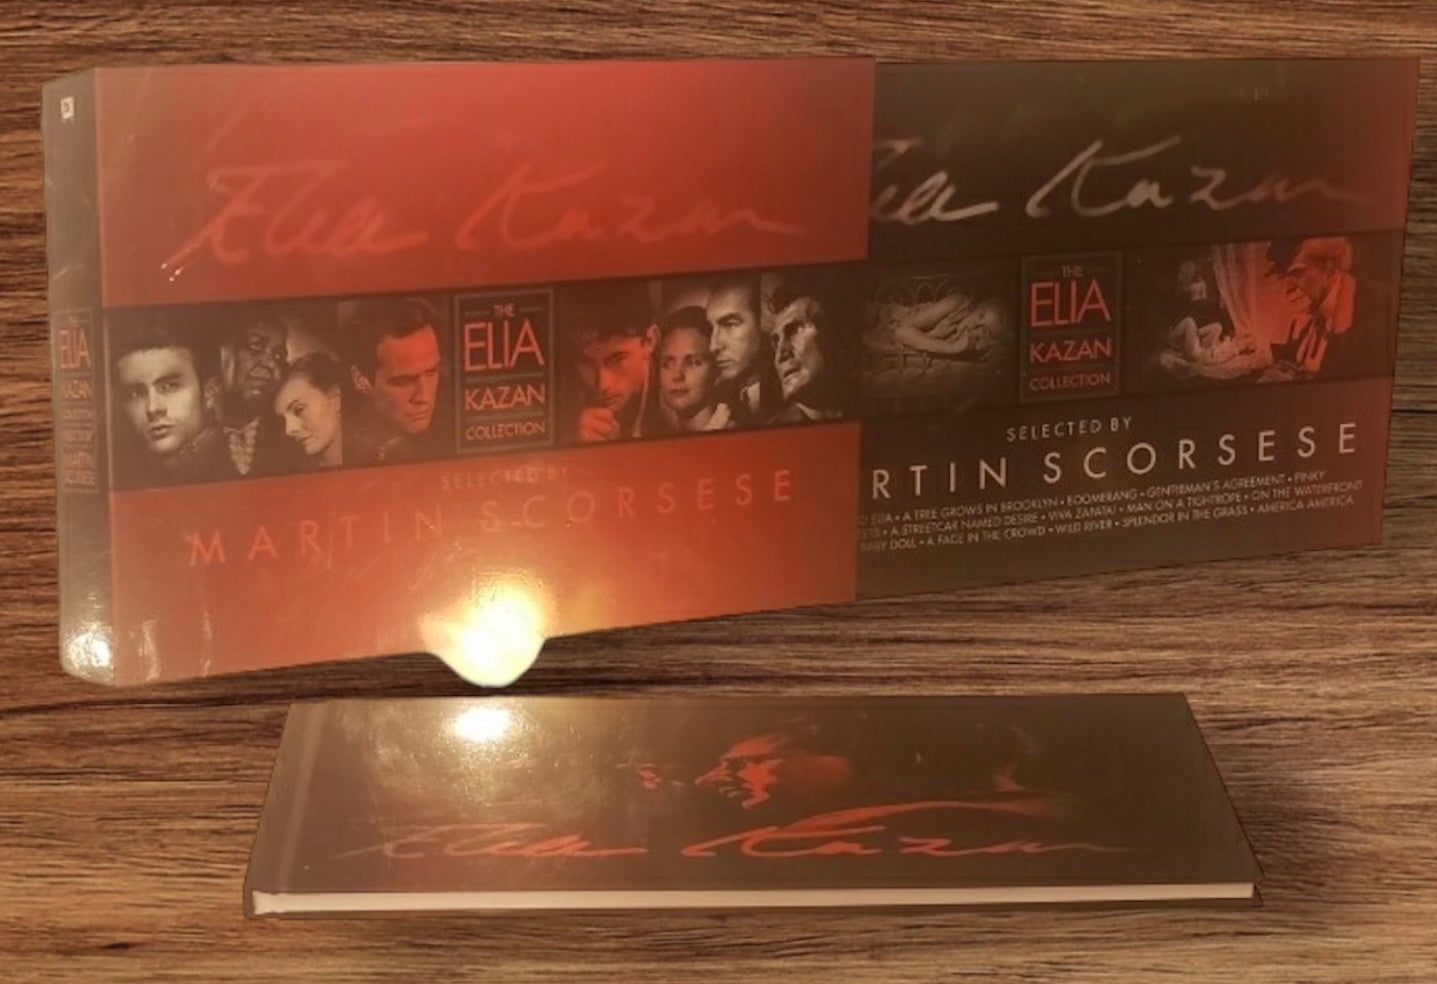 The Elia Kazan Collection-Selected by Martin Scorsese